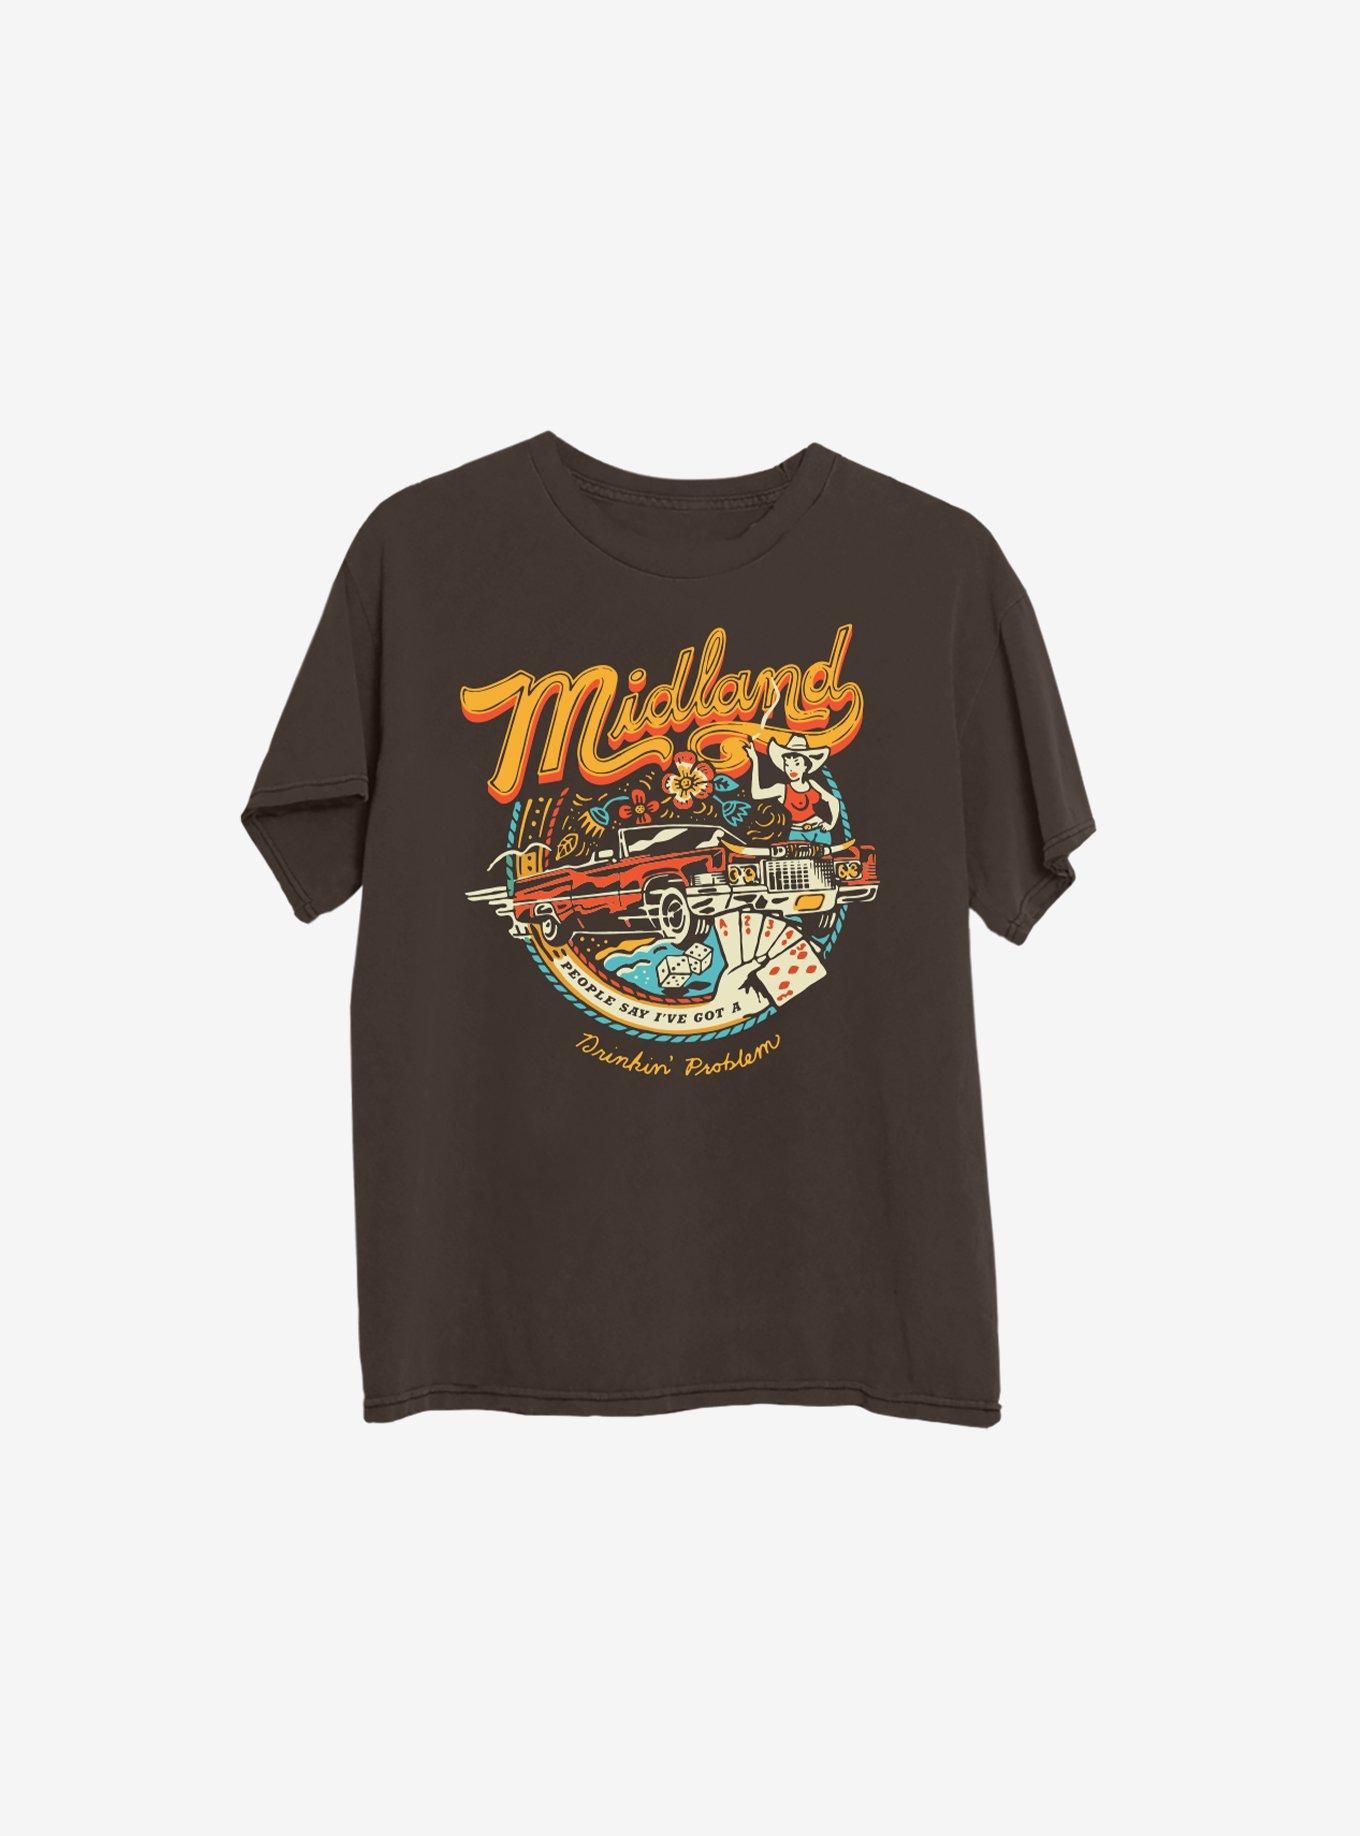 Midland Car Boyfriend Fit Girls T-Shirt, DARK CHOCOLATE, hi-res